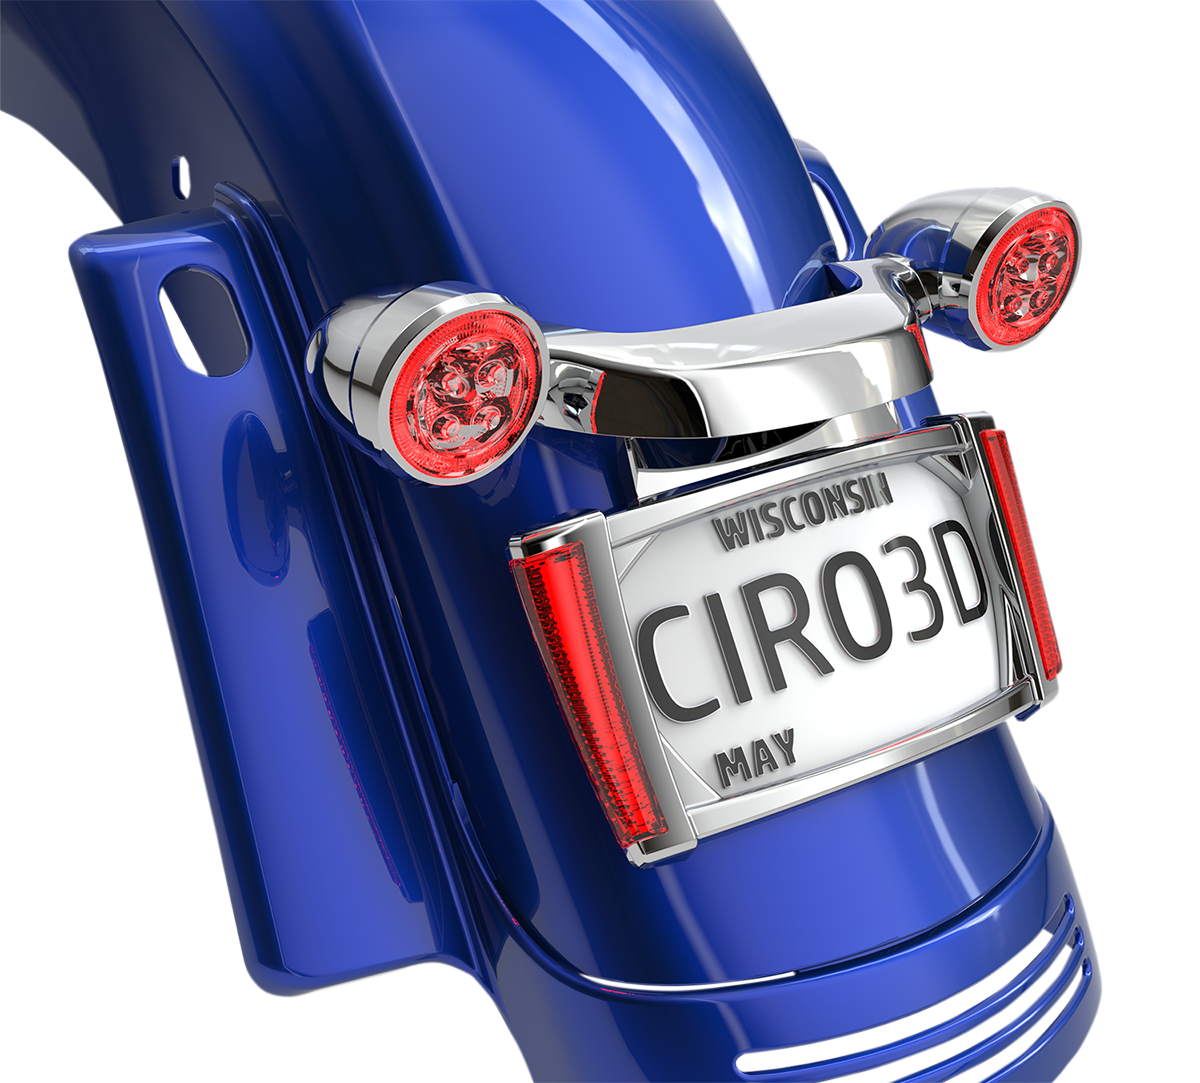 Ciro LED Rear Motorcycle License Plate Frame 2014-2020 Harley Touring Models